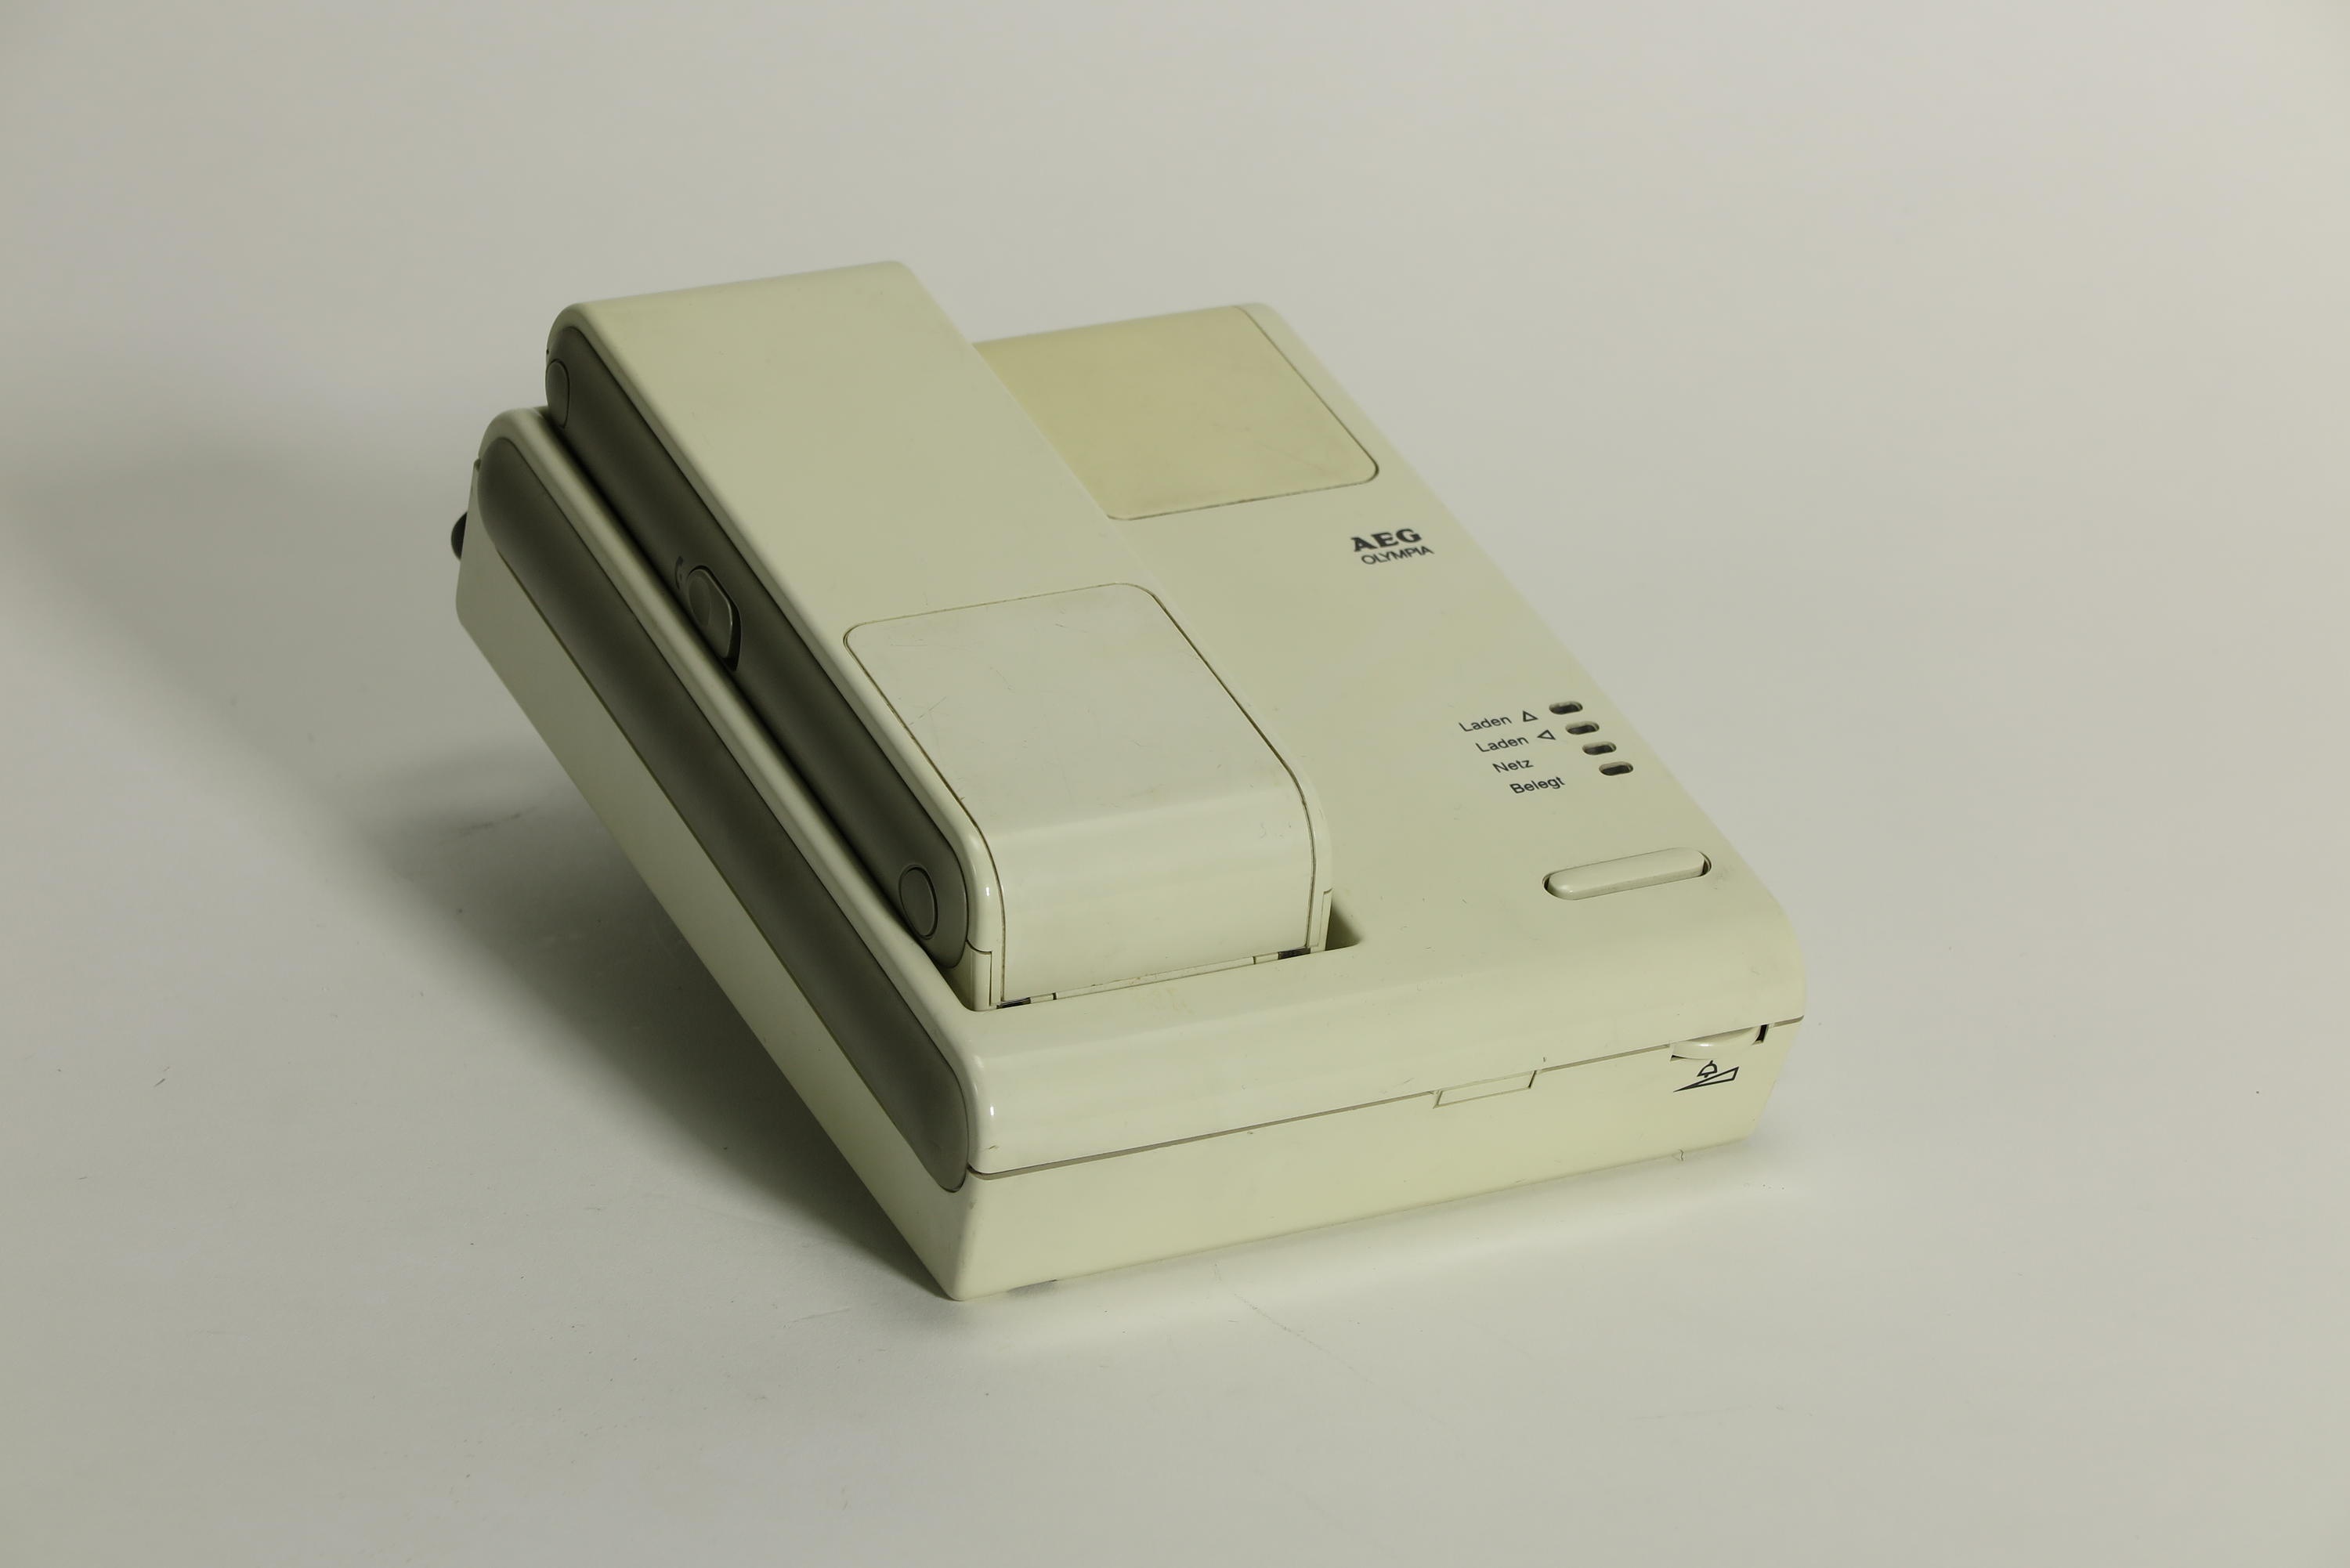 Schnurloses Telefon AEG-Olympia CLT3 (Deutsches Technikmuseum CC BY)